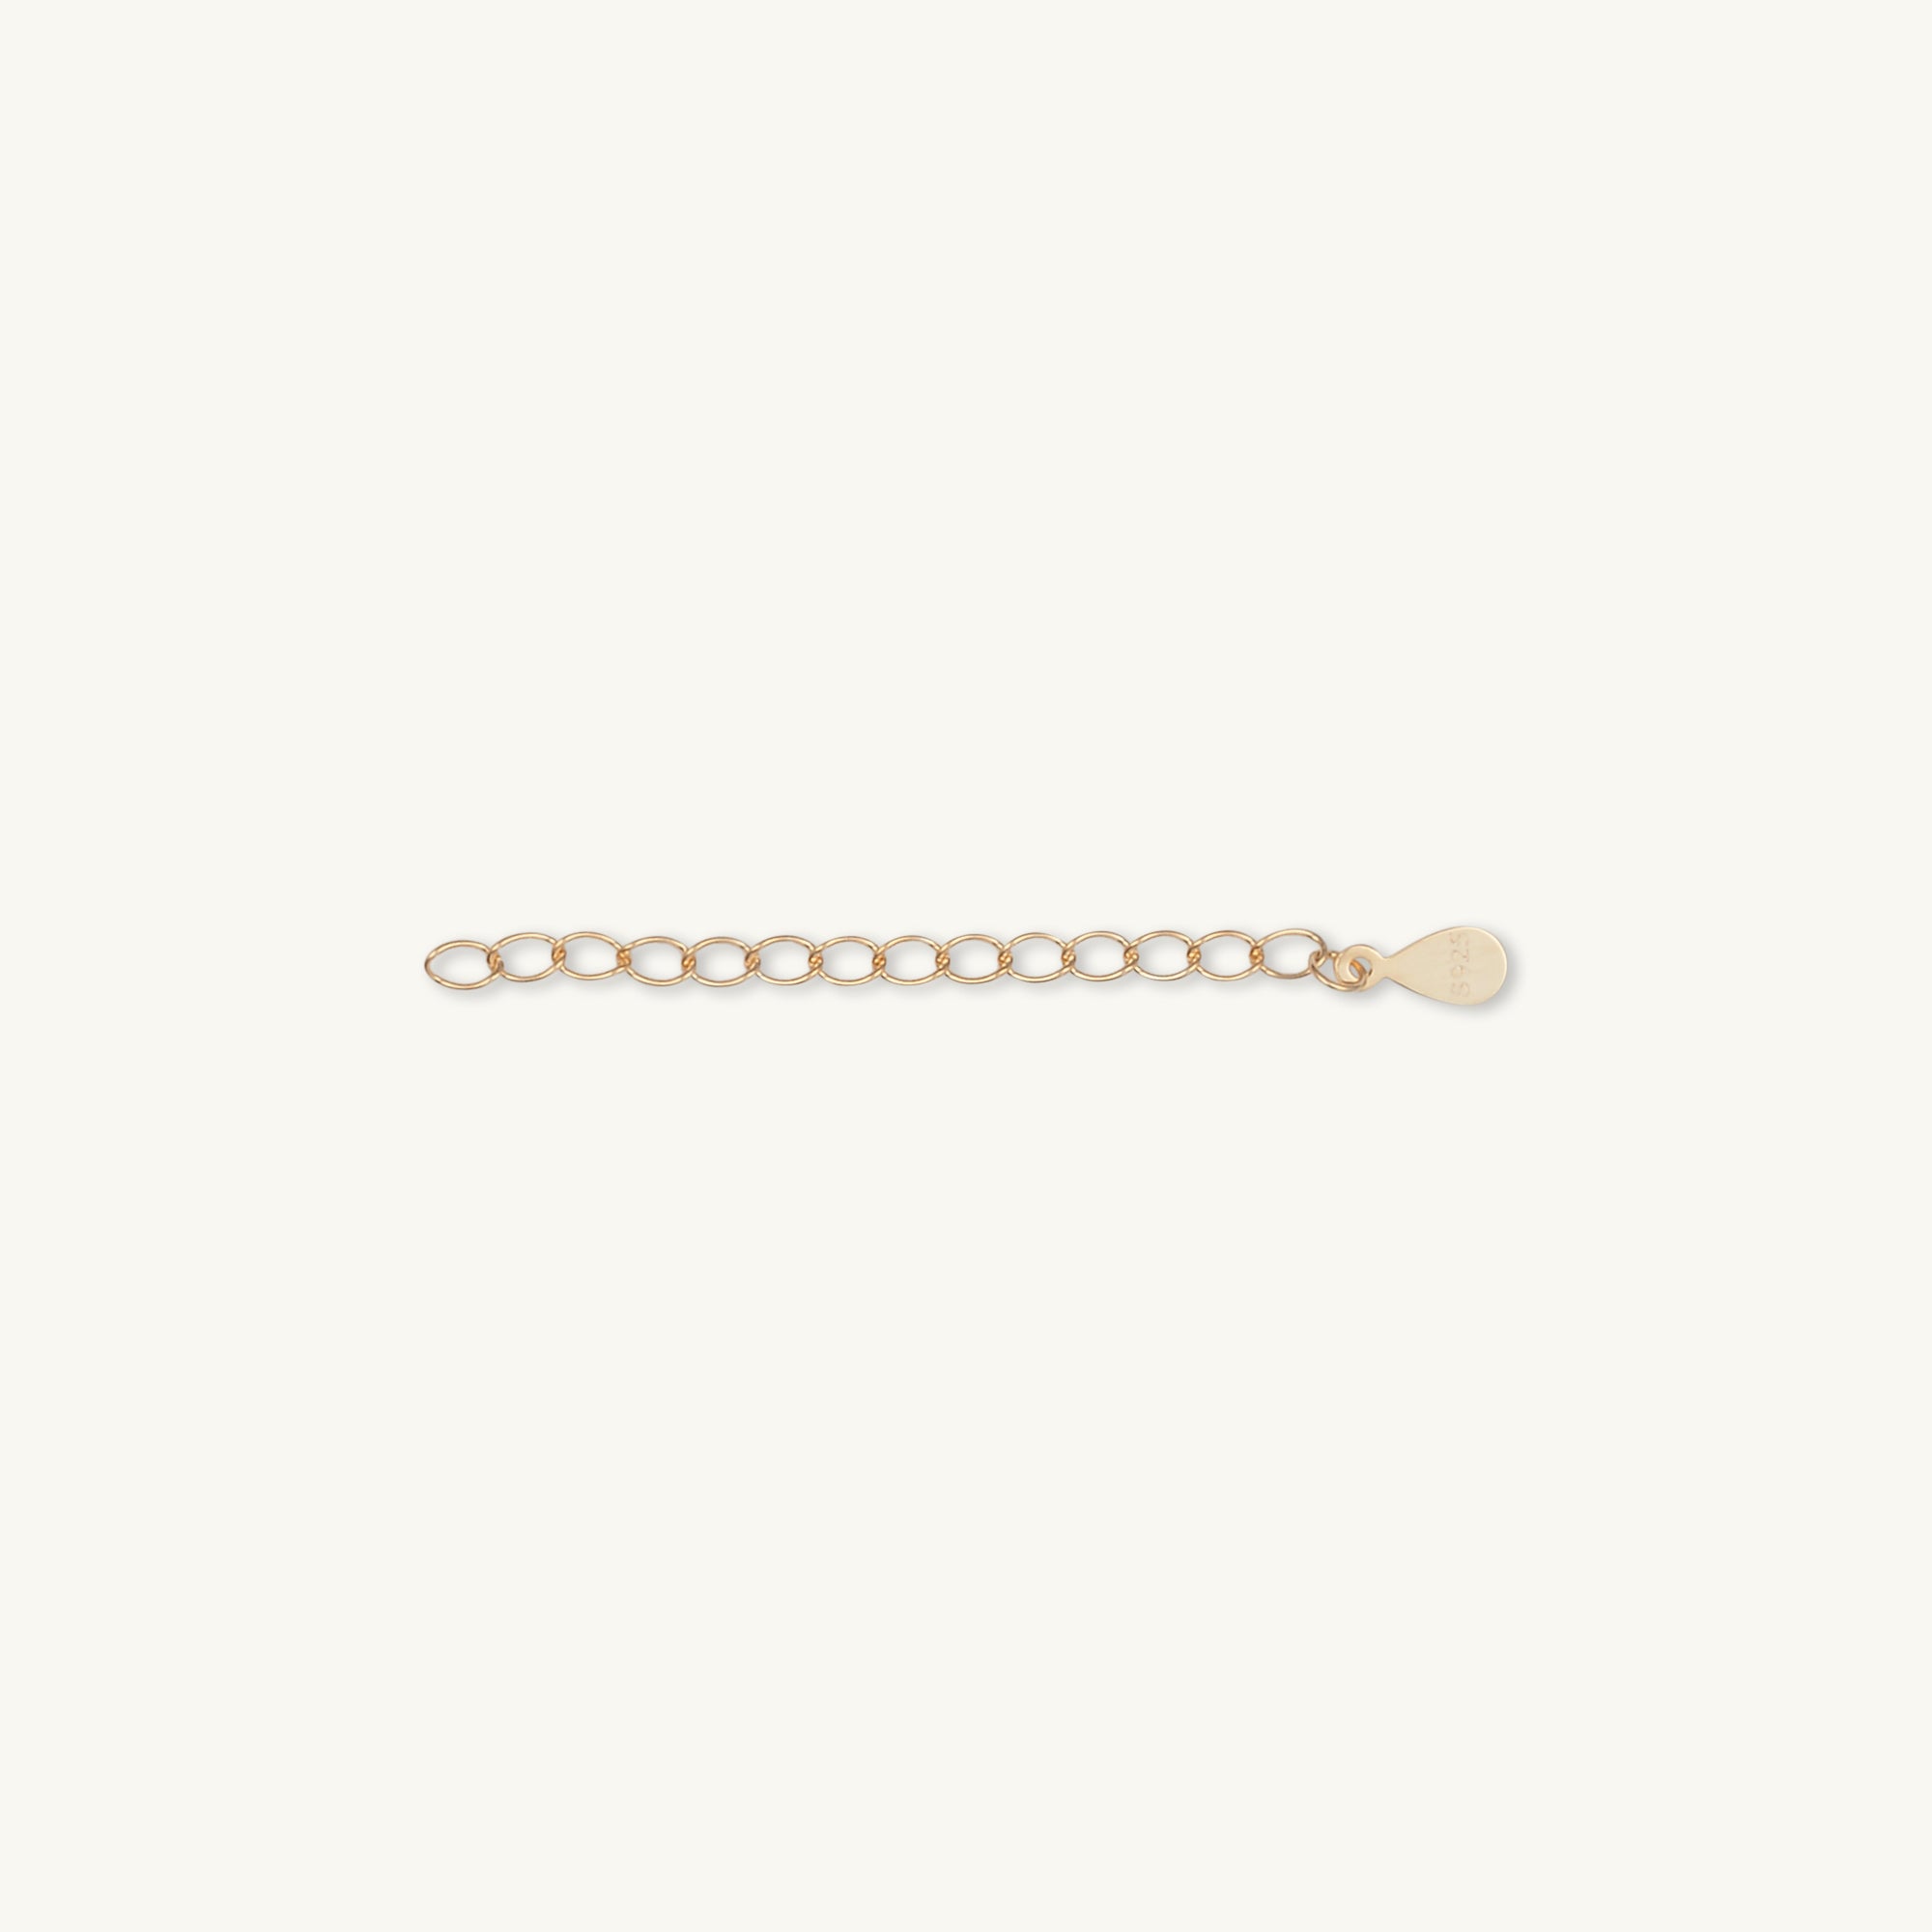 5cm Adjustable Extender Necklace Chain